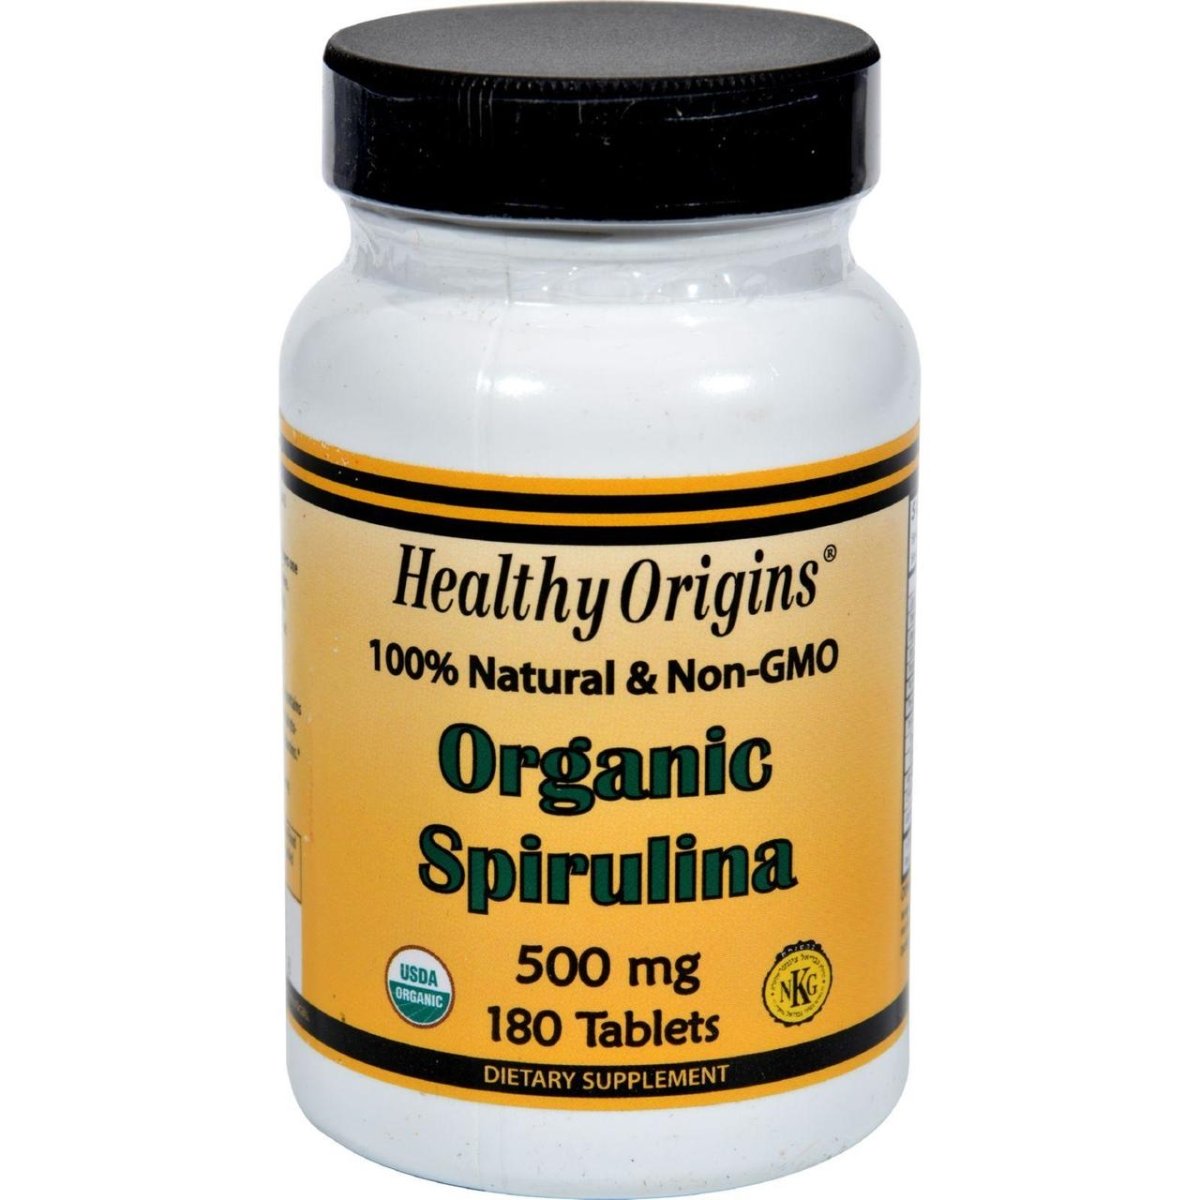 Hg1234624 500 Mg Organic Spirulina - 180 Count